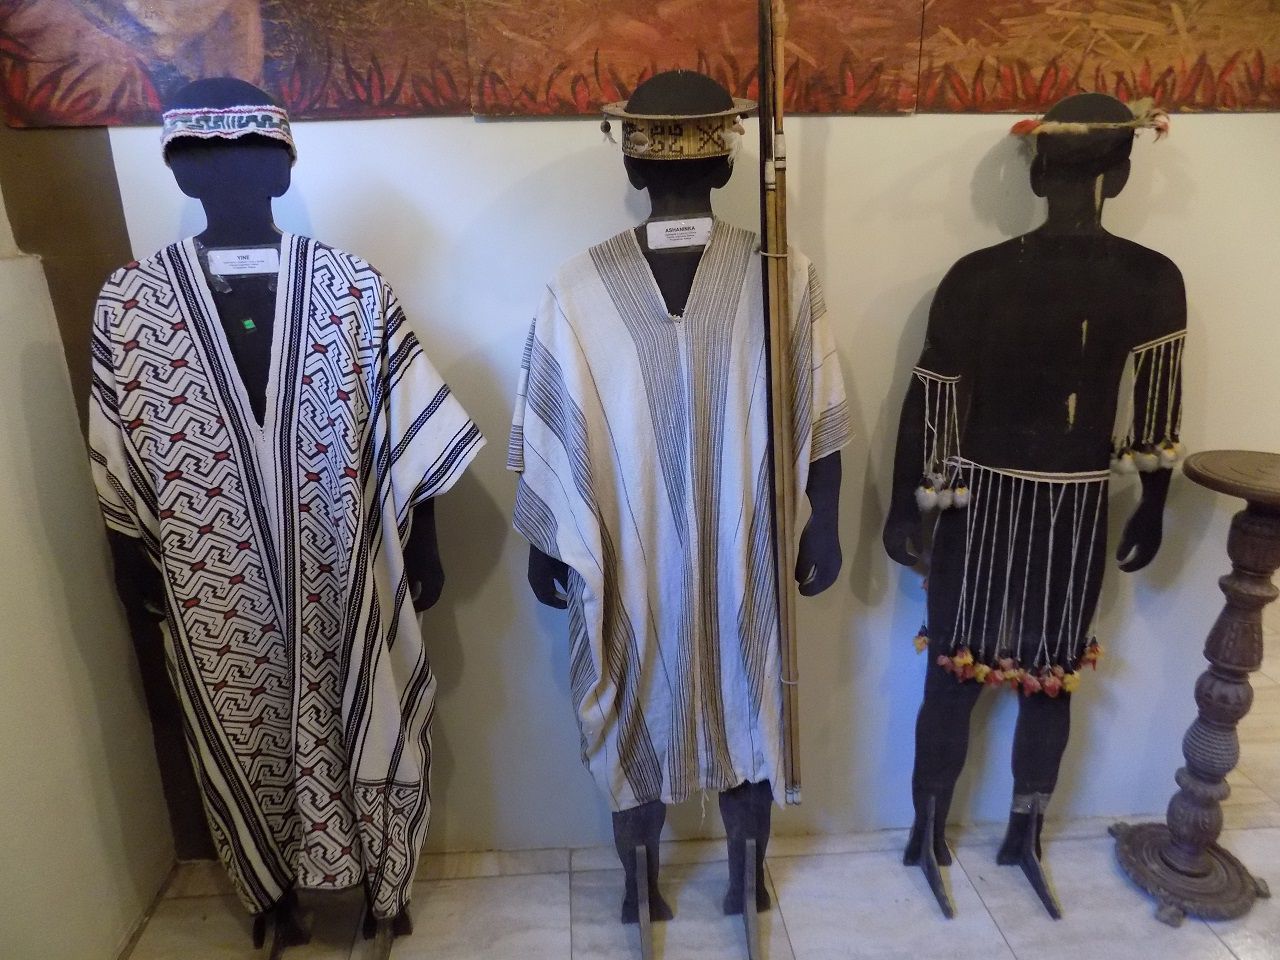 представлена одежда разных племен - Айяуаска.